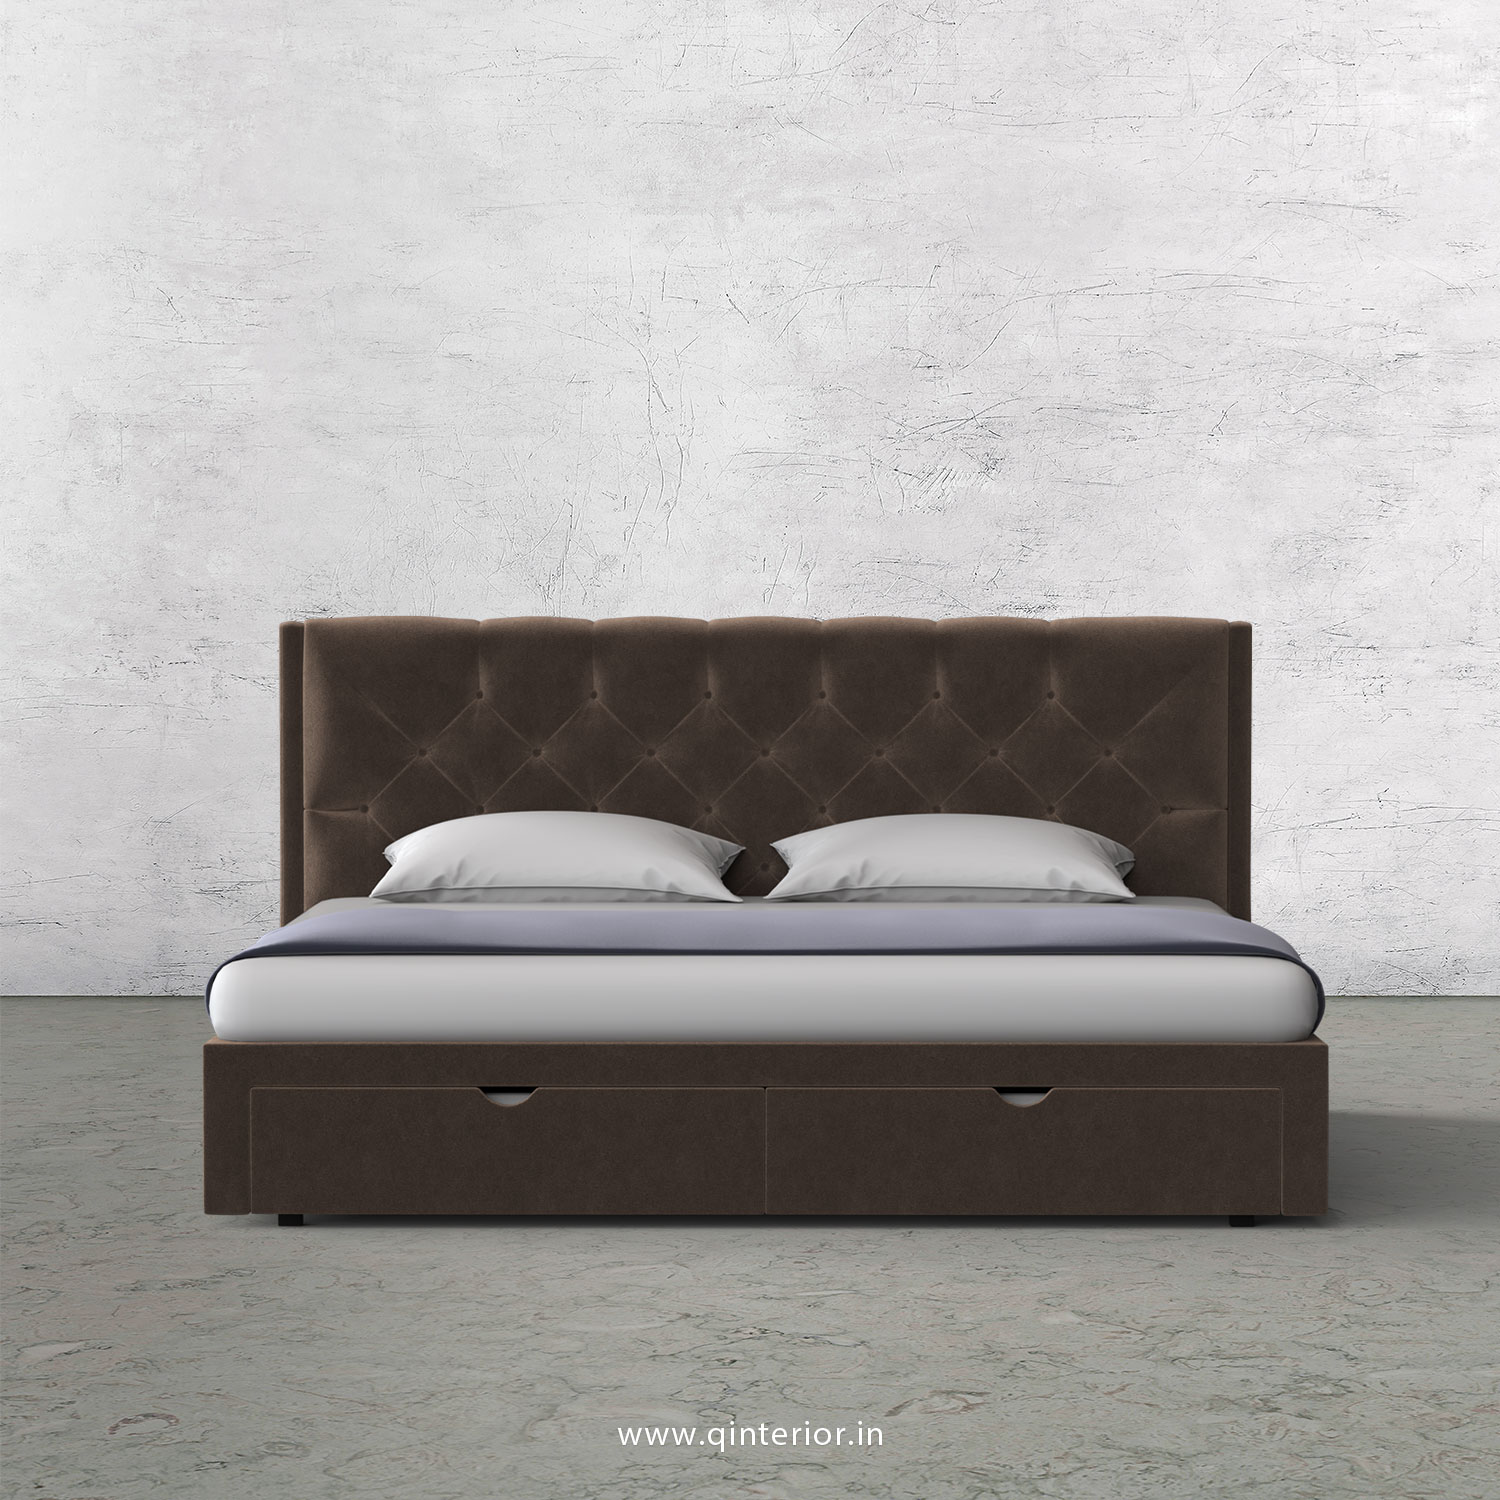 Scorpius King Size Storage Bed in Velvet Fabric - KBD001 VL02